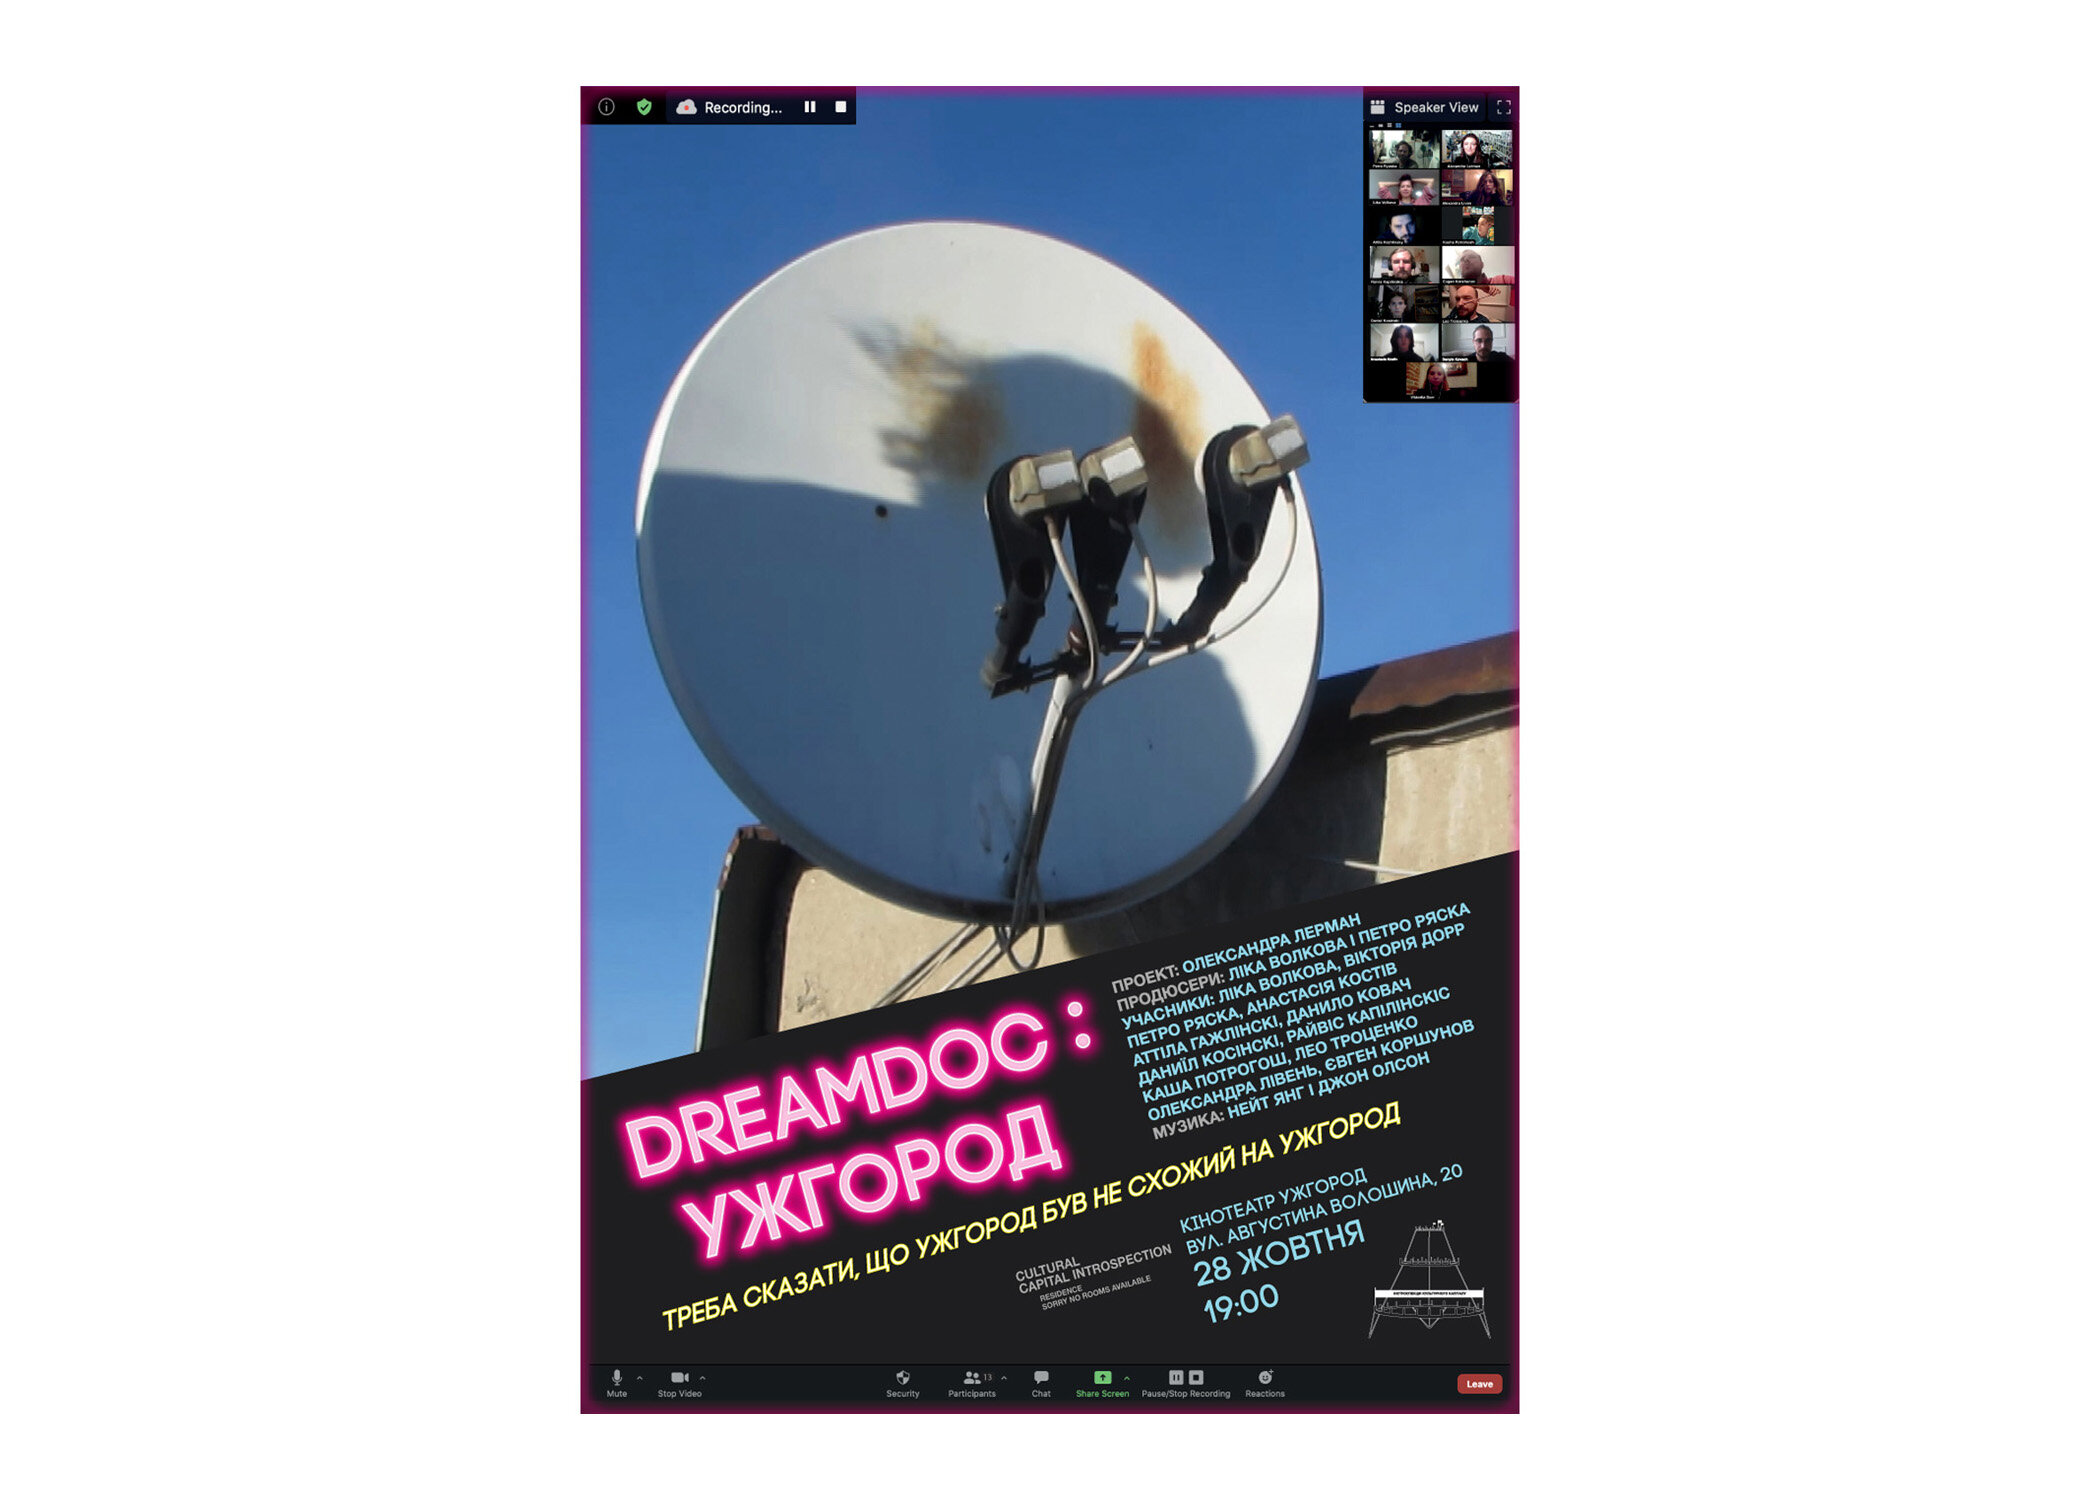 DreamDoc: Uzhhorod poster designed by Maria Beliaeva